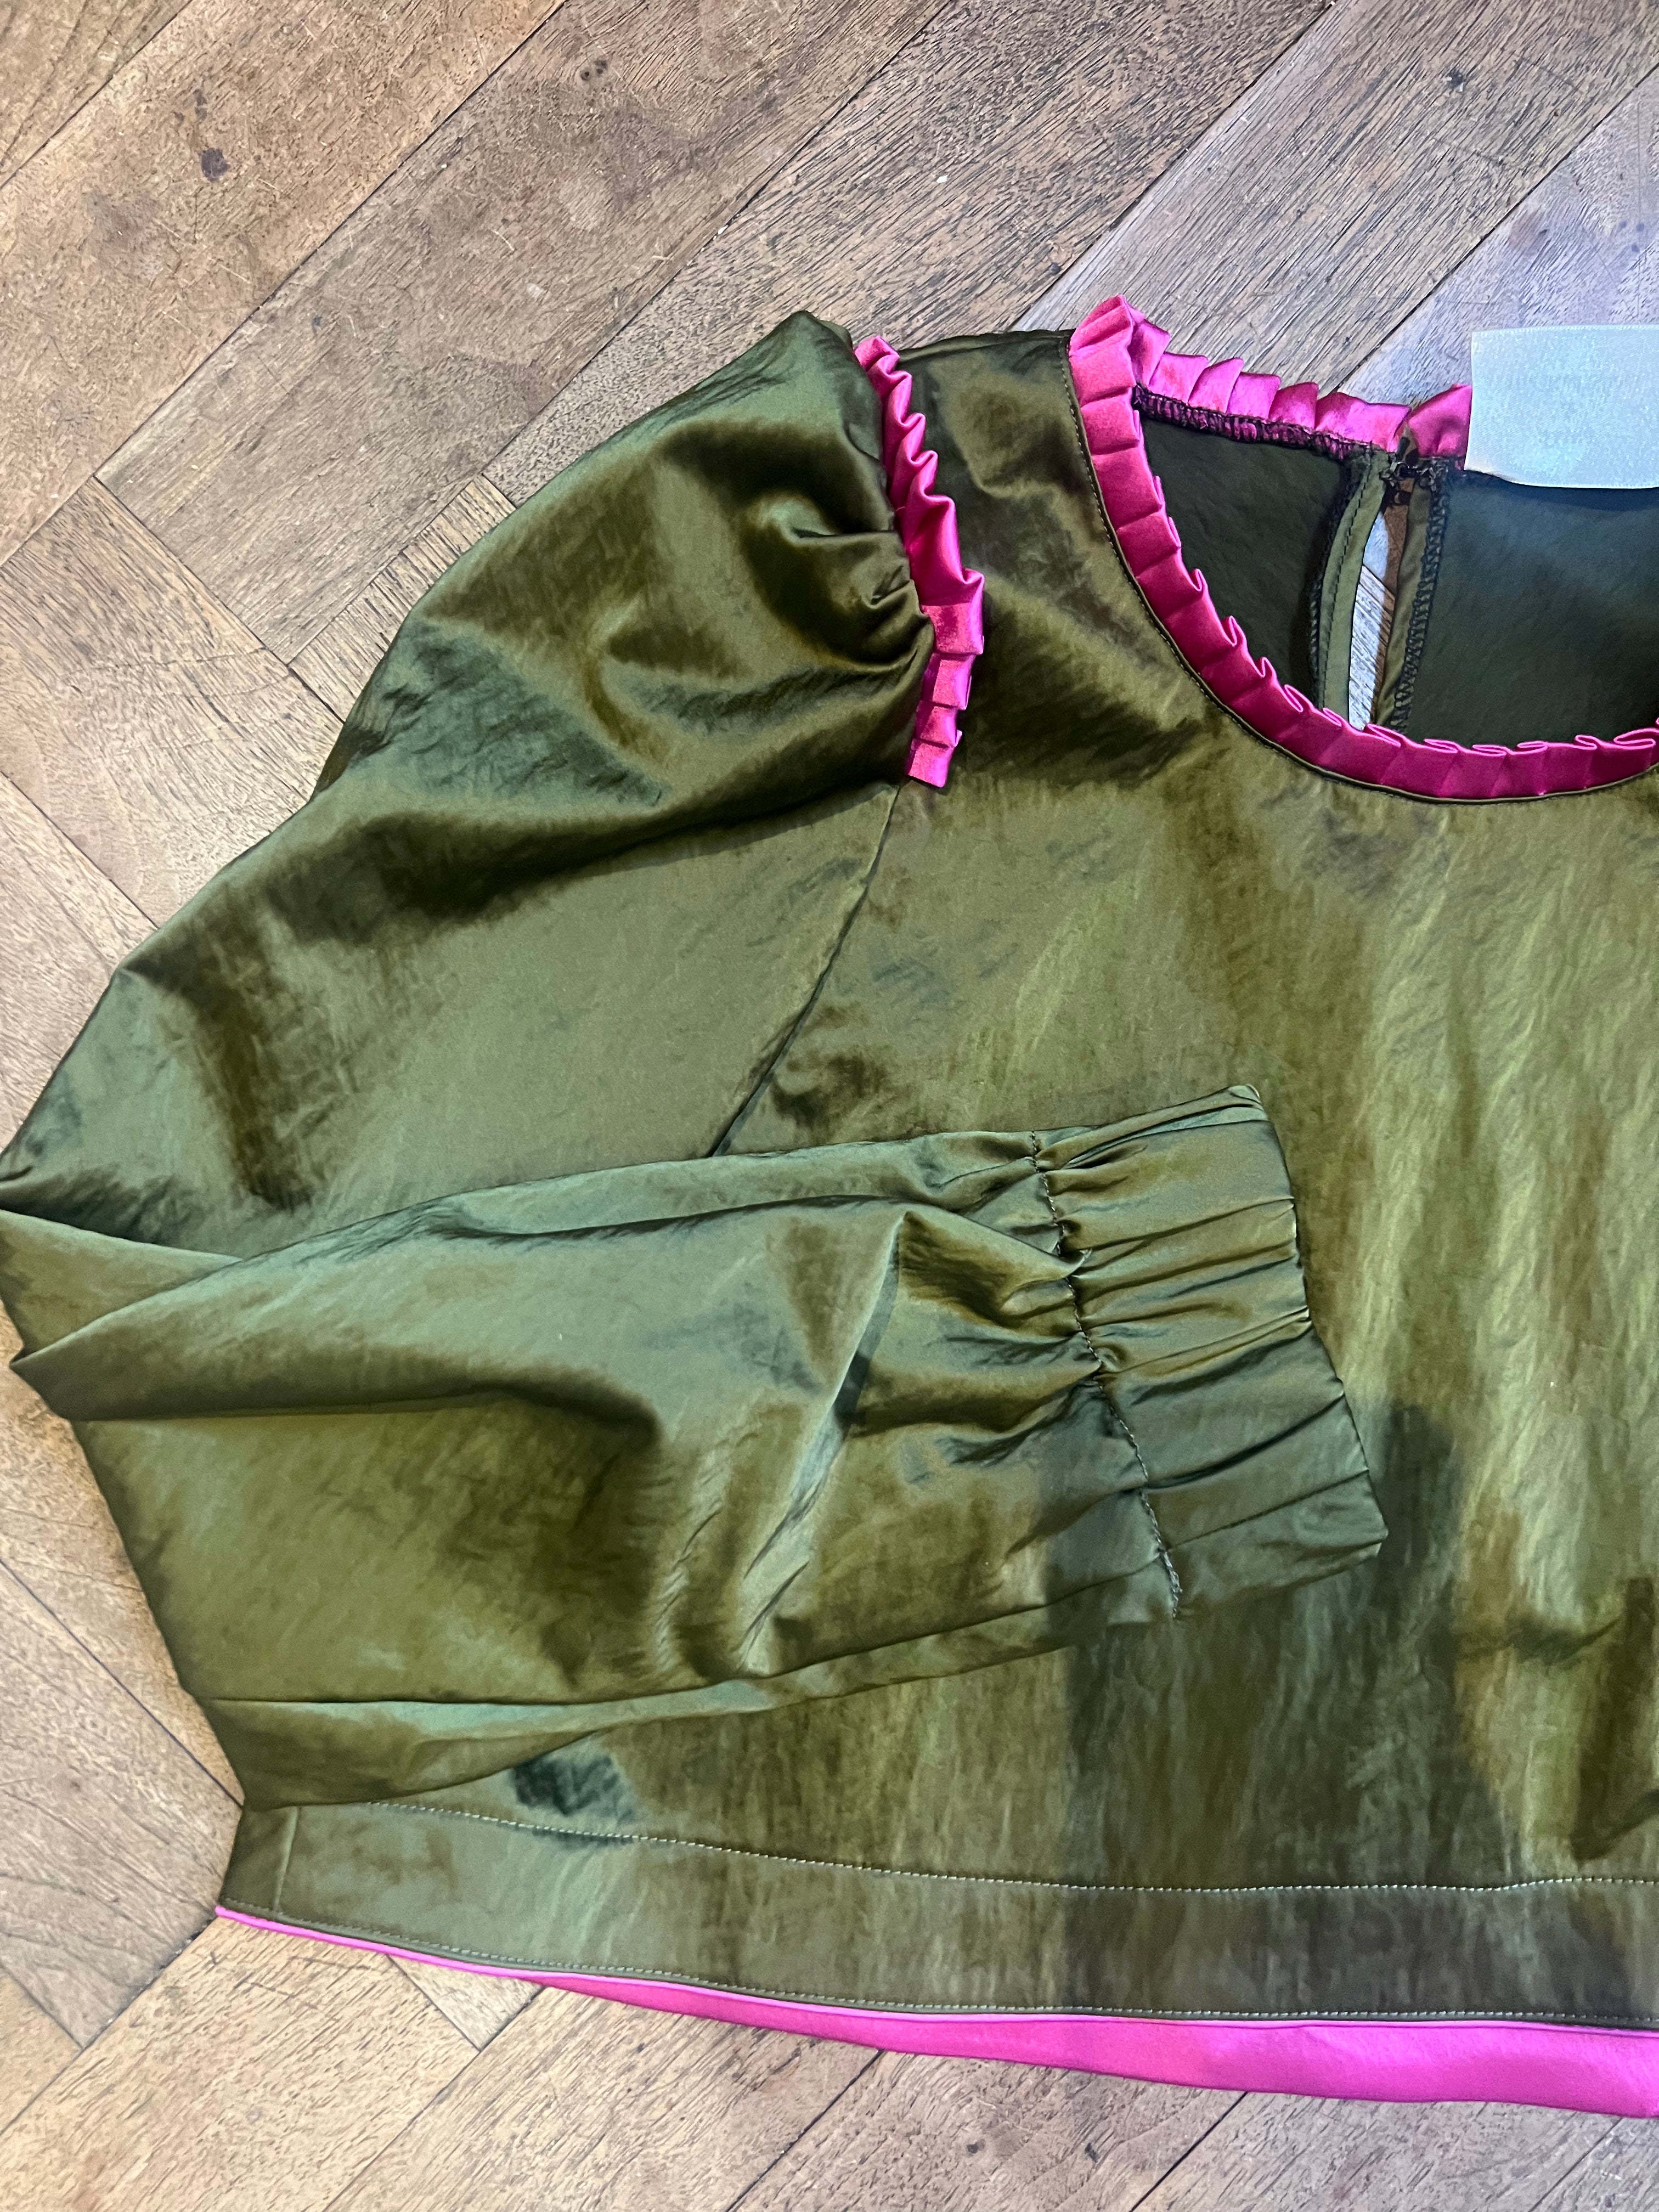 Olive satin cropped blouse sample size 10-12